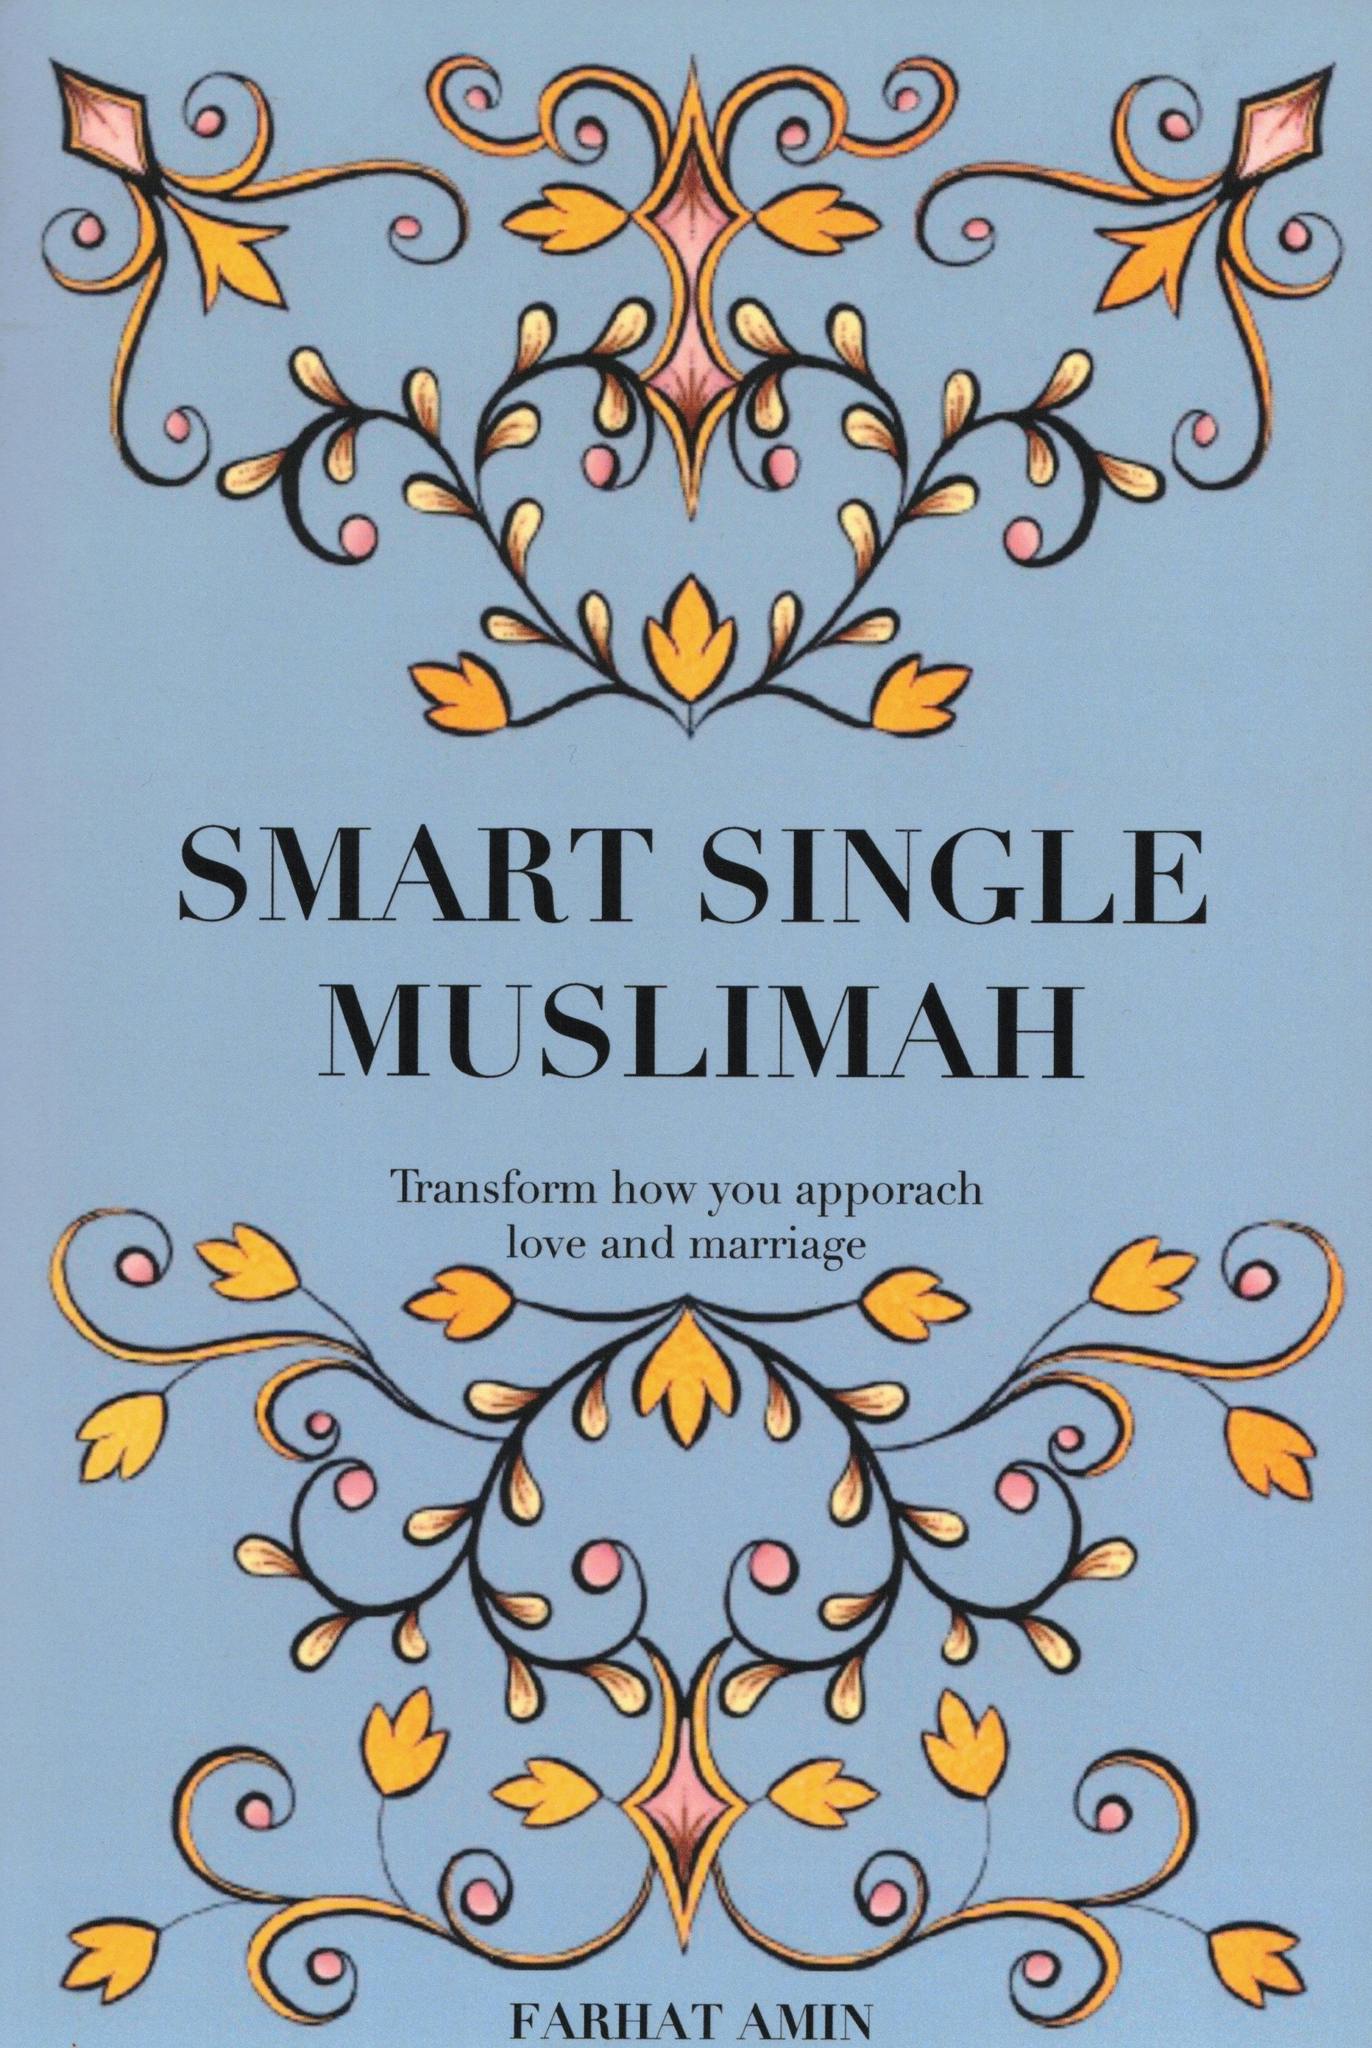 Smart single muslimah